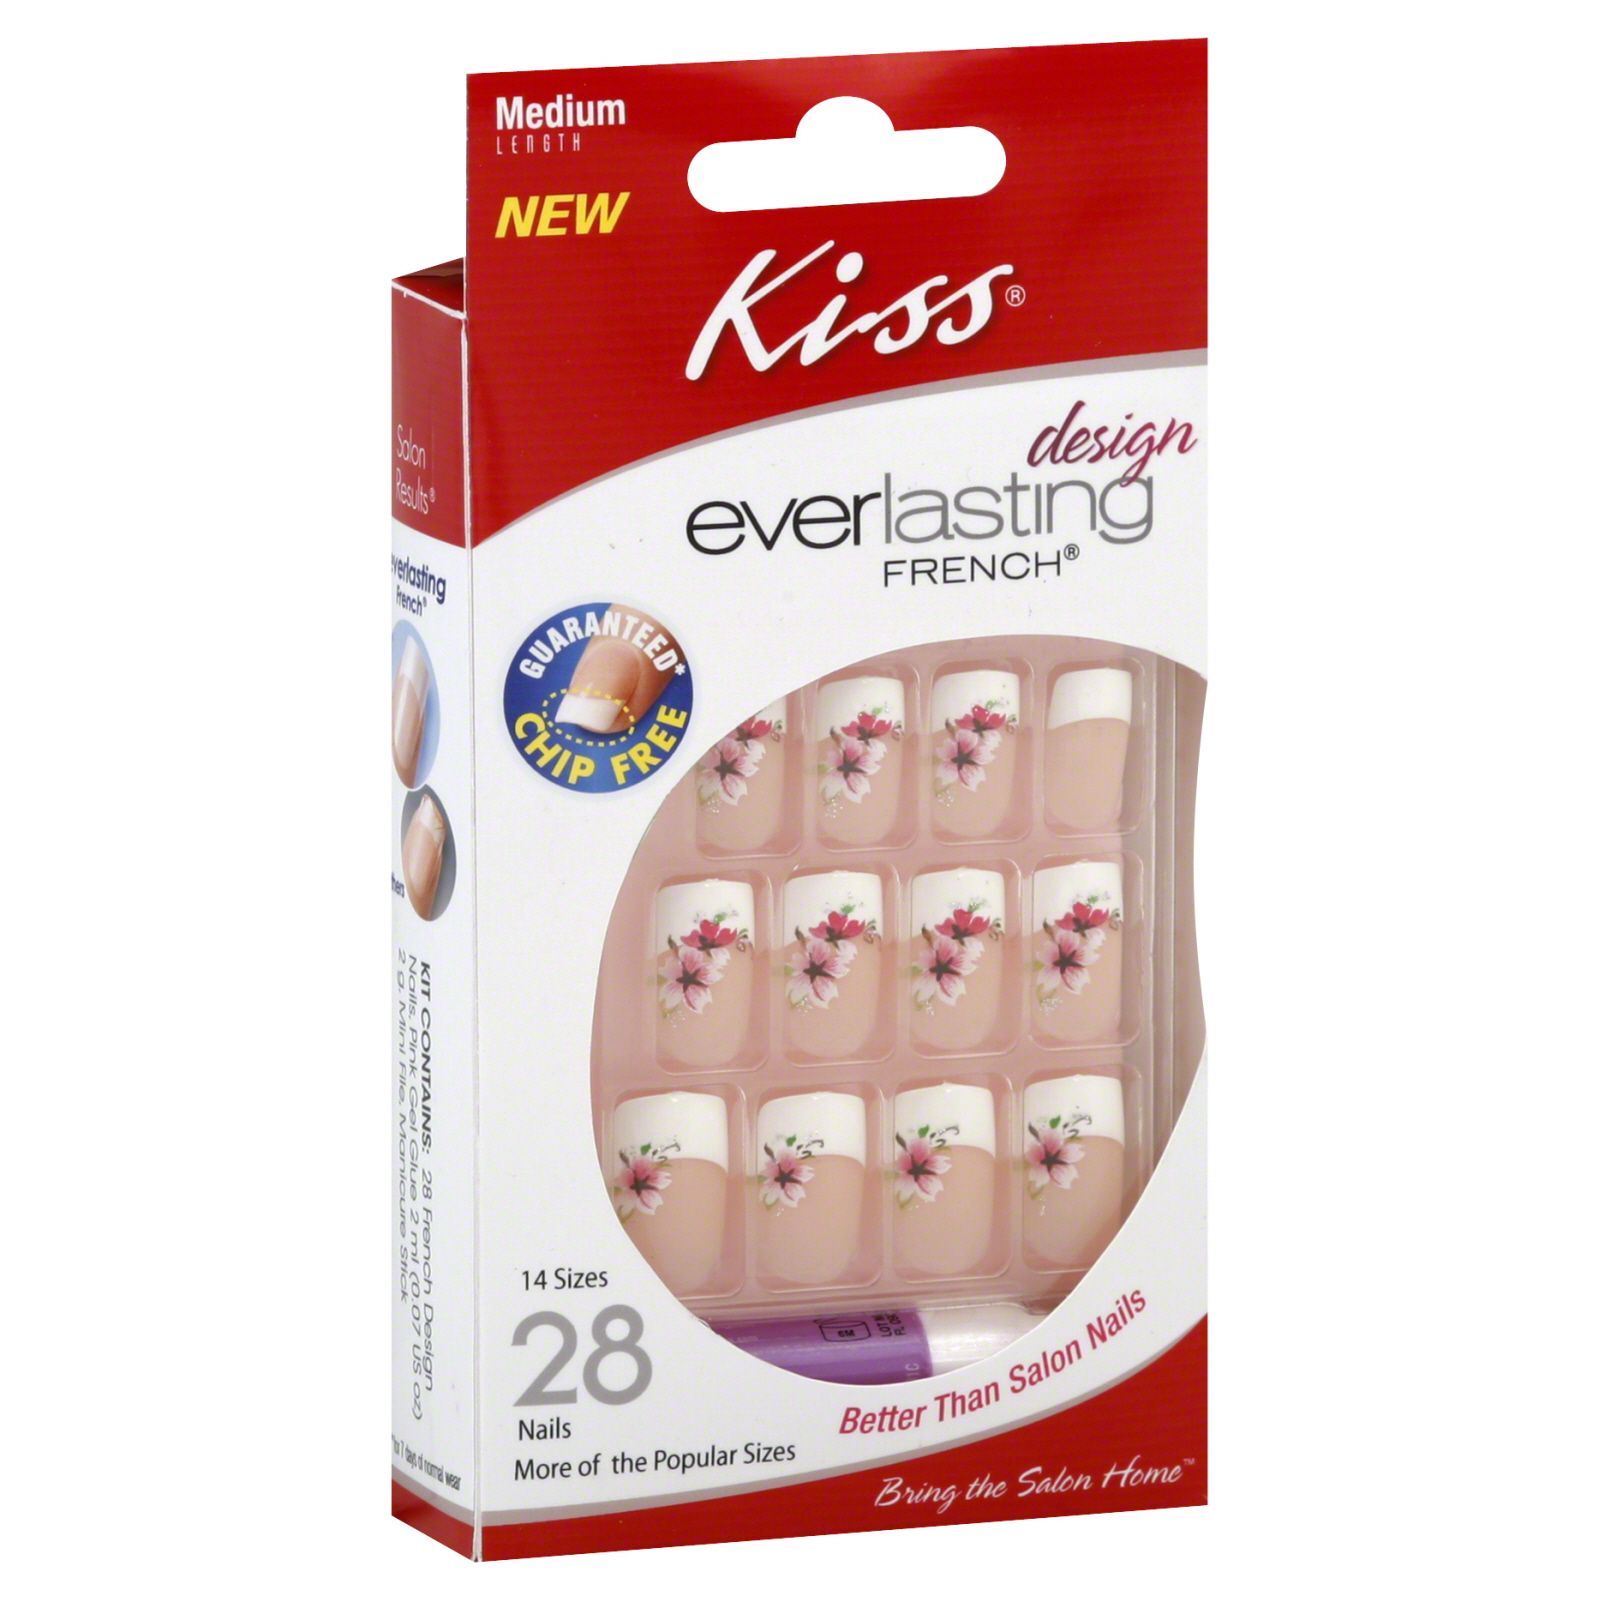 Kiss Design Everlasting French Nail Kit, Medium Length, EFD01 1 kit